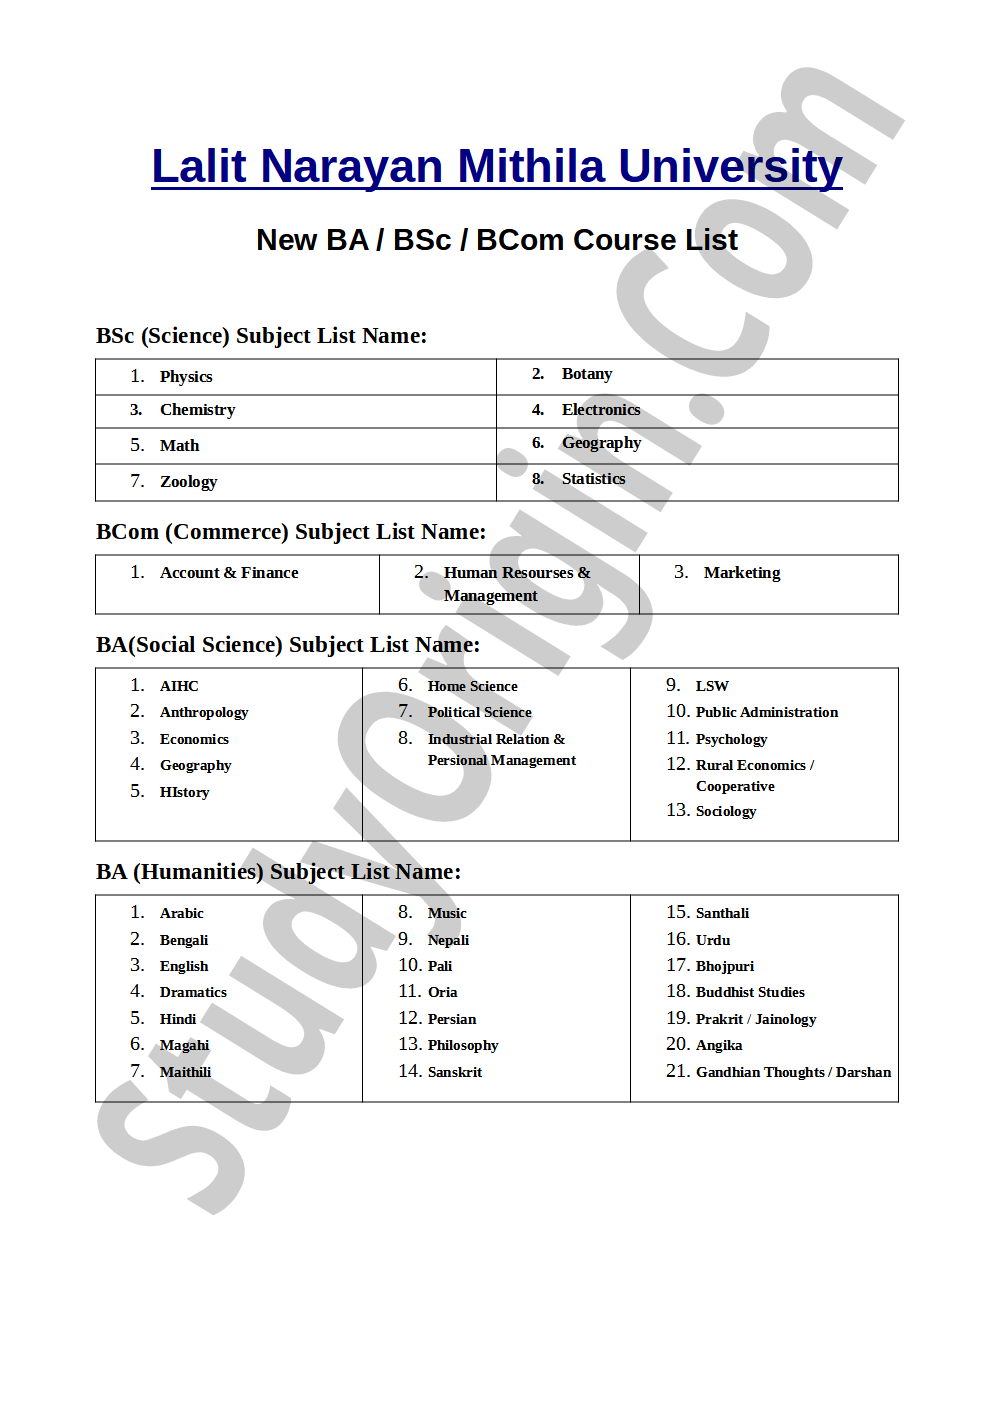 LNMU BA BSc BCom New Course List